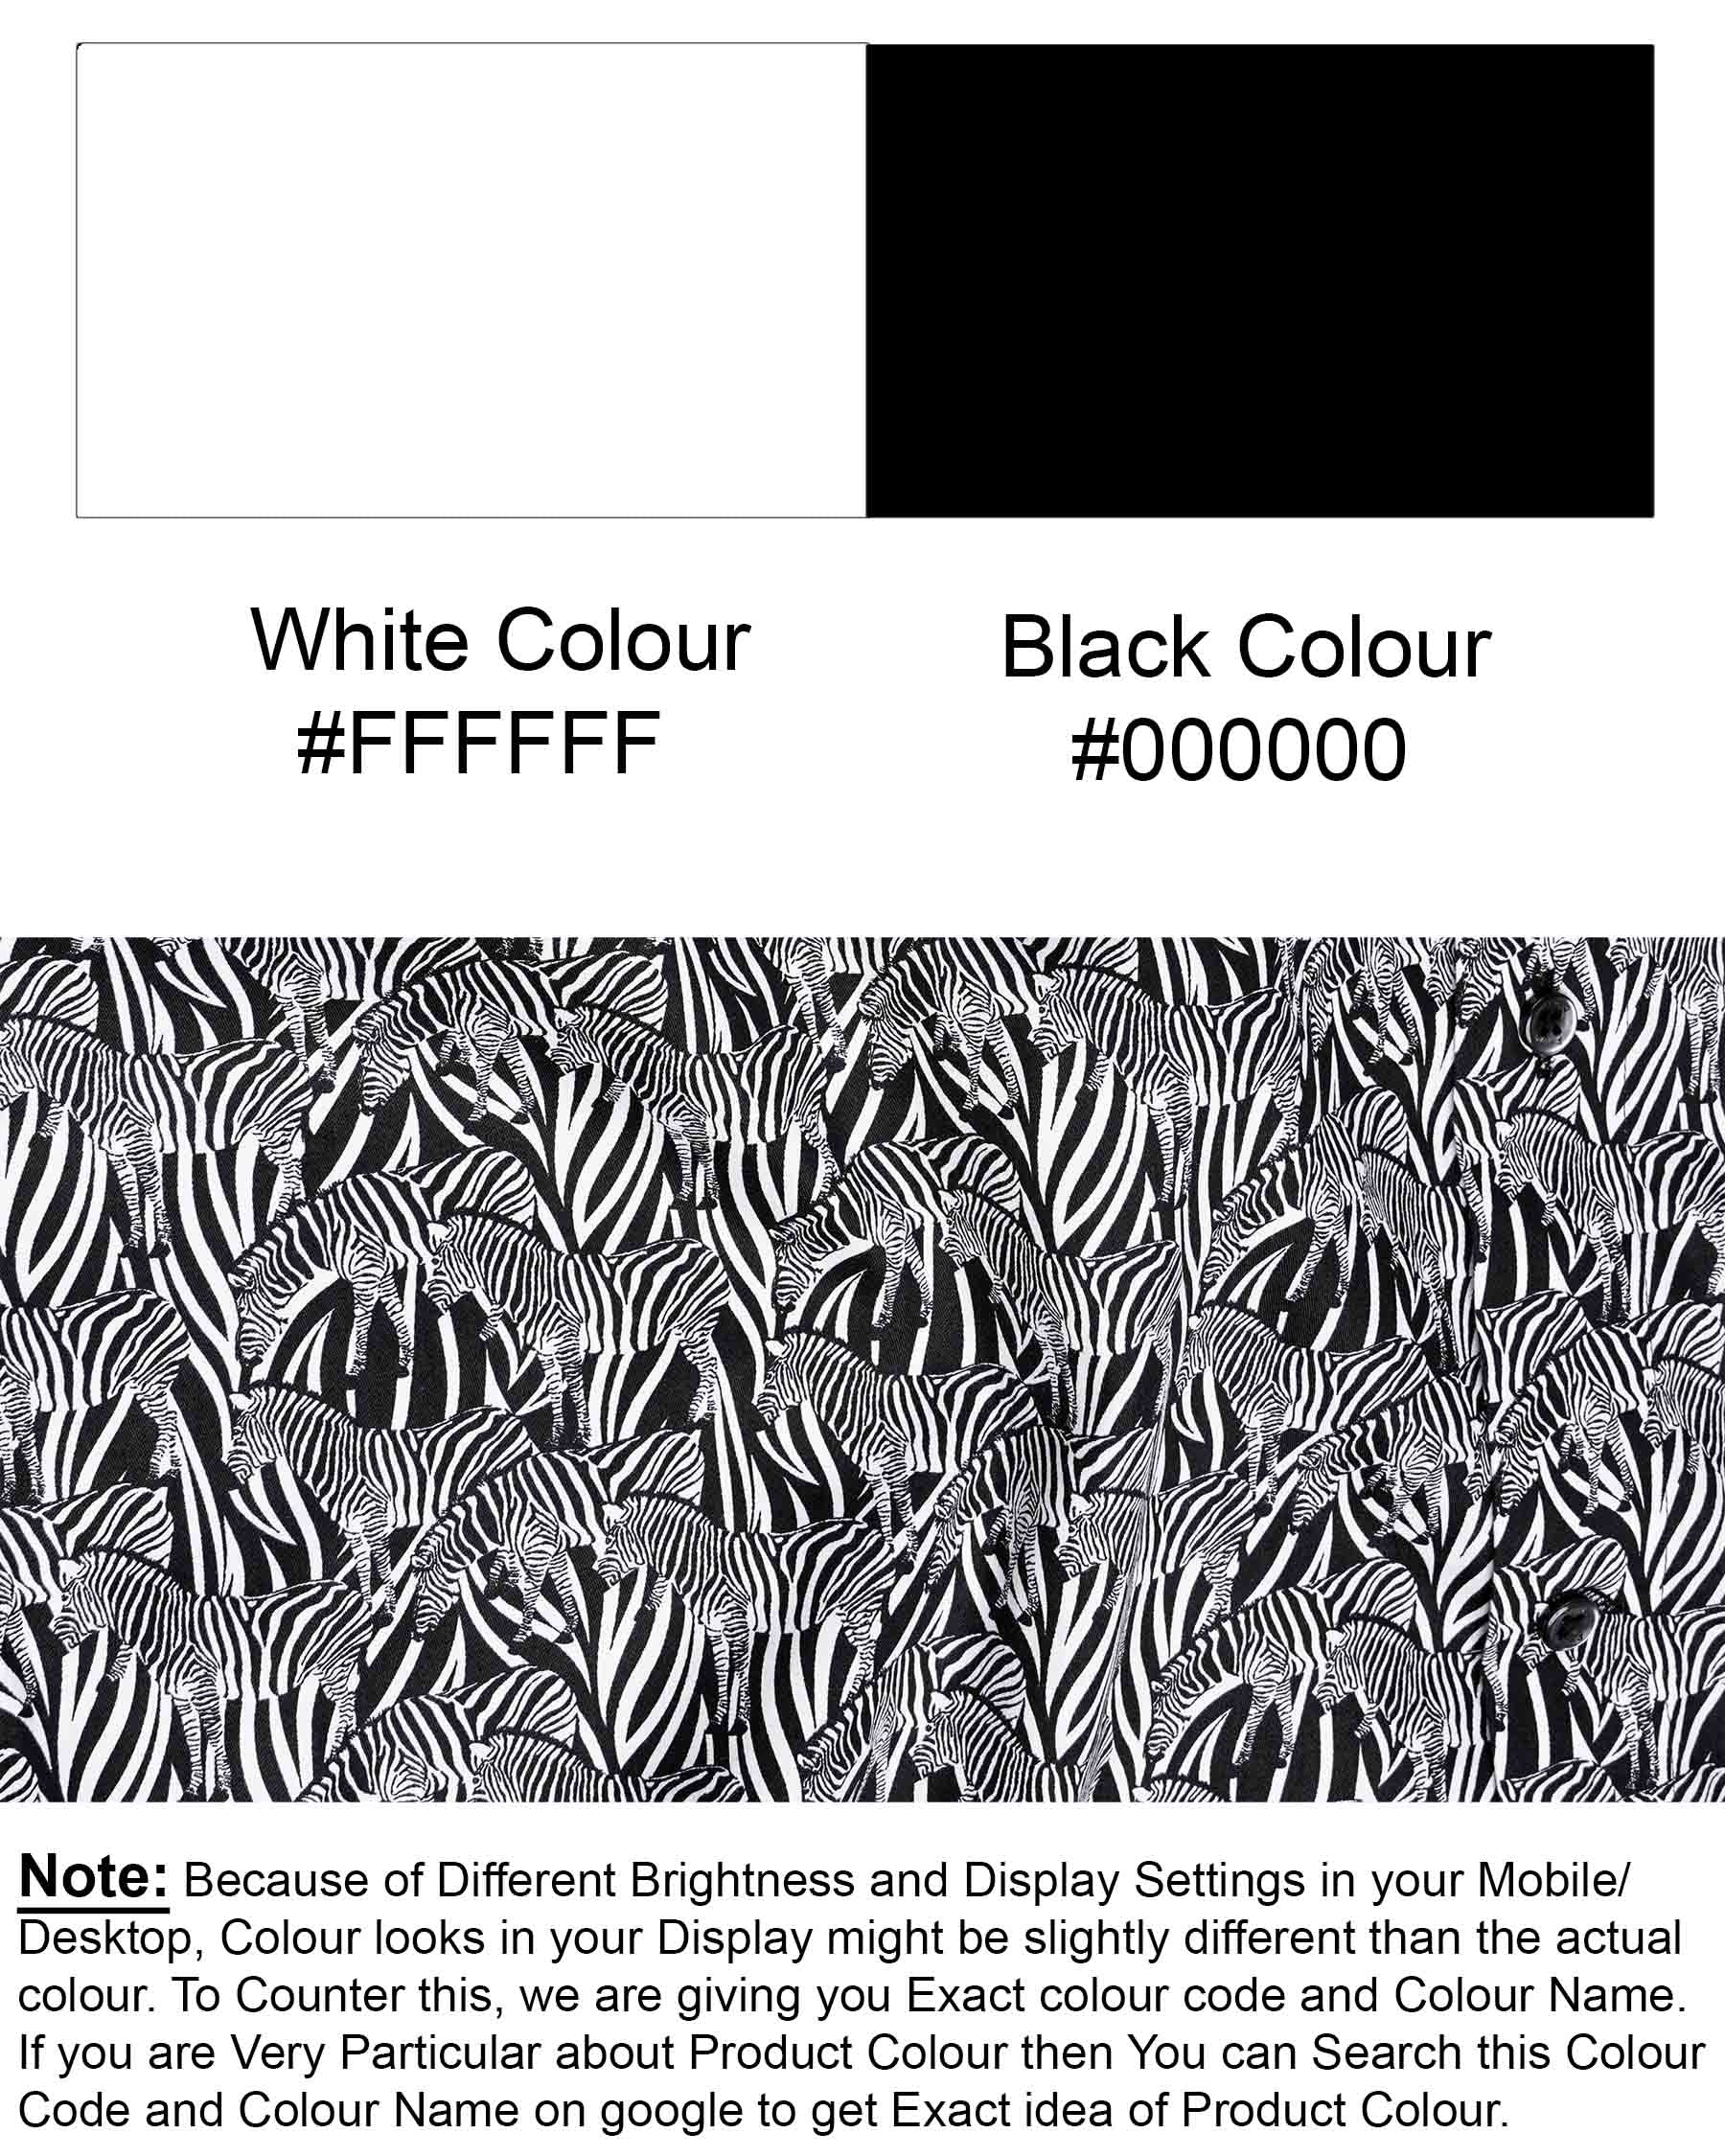 Black and White Zebra Printed Super Soft Premium Cotton Shirt 7676-BLK-38, 7676-BLK-H-38, 7676-BLK-39,7676-BLK-H-39, 7676-BLK-40, 7676-BLK-H-40, 7676-BLK-42, 7676-BLK-H-42, 7676-BLK-44, 7676-BLK-H-44, 7676-BLK-46, 7676-BLK-H-46, 7676-BLK-48, 7676-BLK-H-48, 7676-BLK-50, 7676-BLK-H-50, 7676-BLK-52, 7676-BLK-H-52